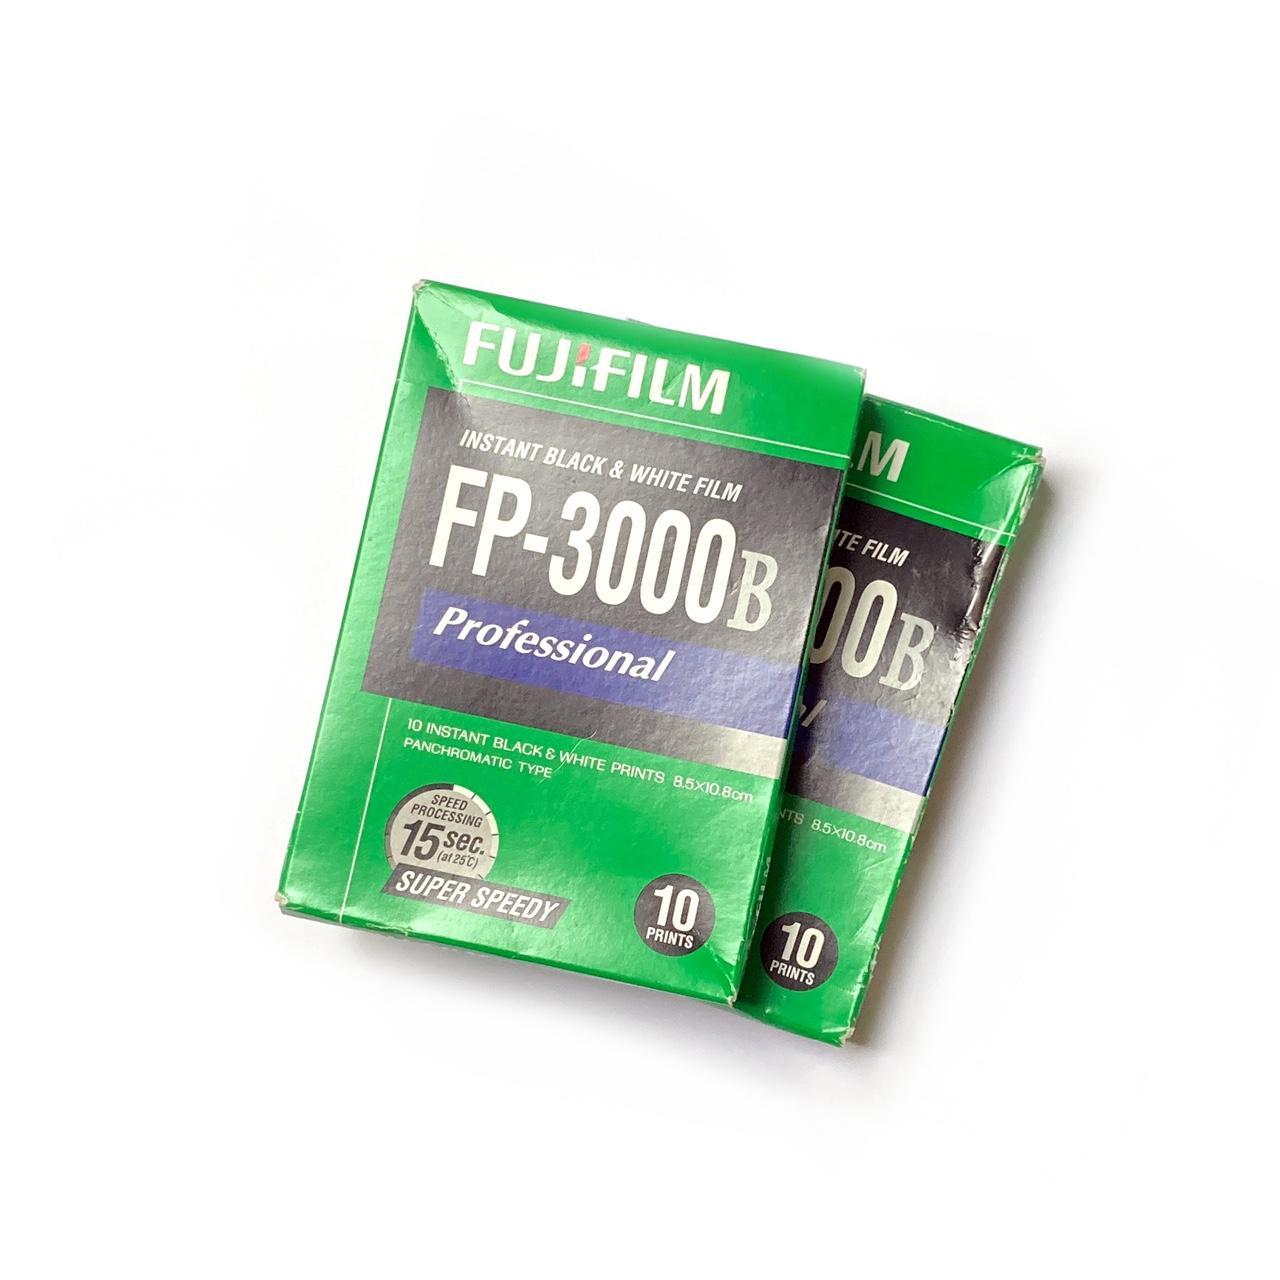 20 prints, 2 boxes of Fuji FP 3000B black and white... - Depop